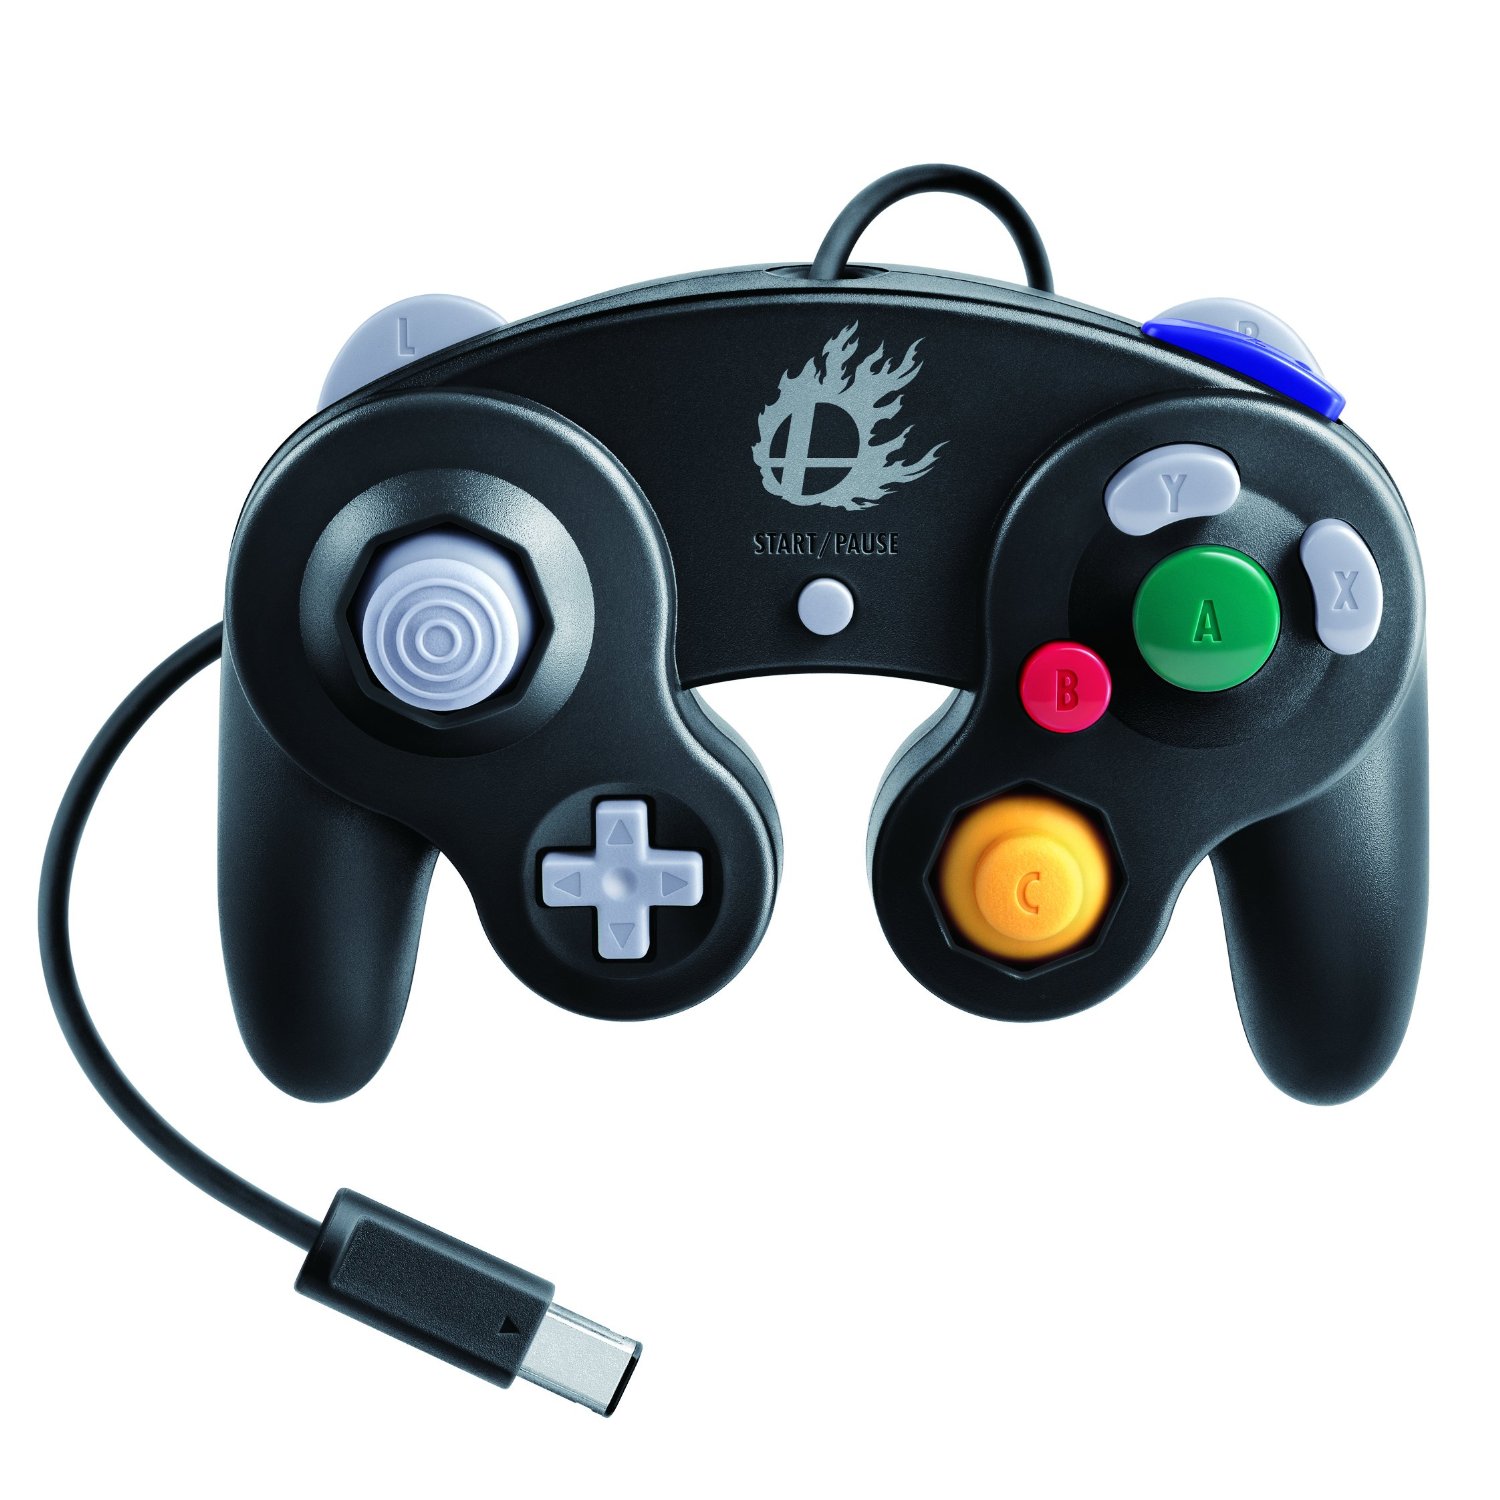 GameCube Controller - Super Smash Bros. Edition pre-orders open